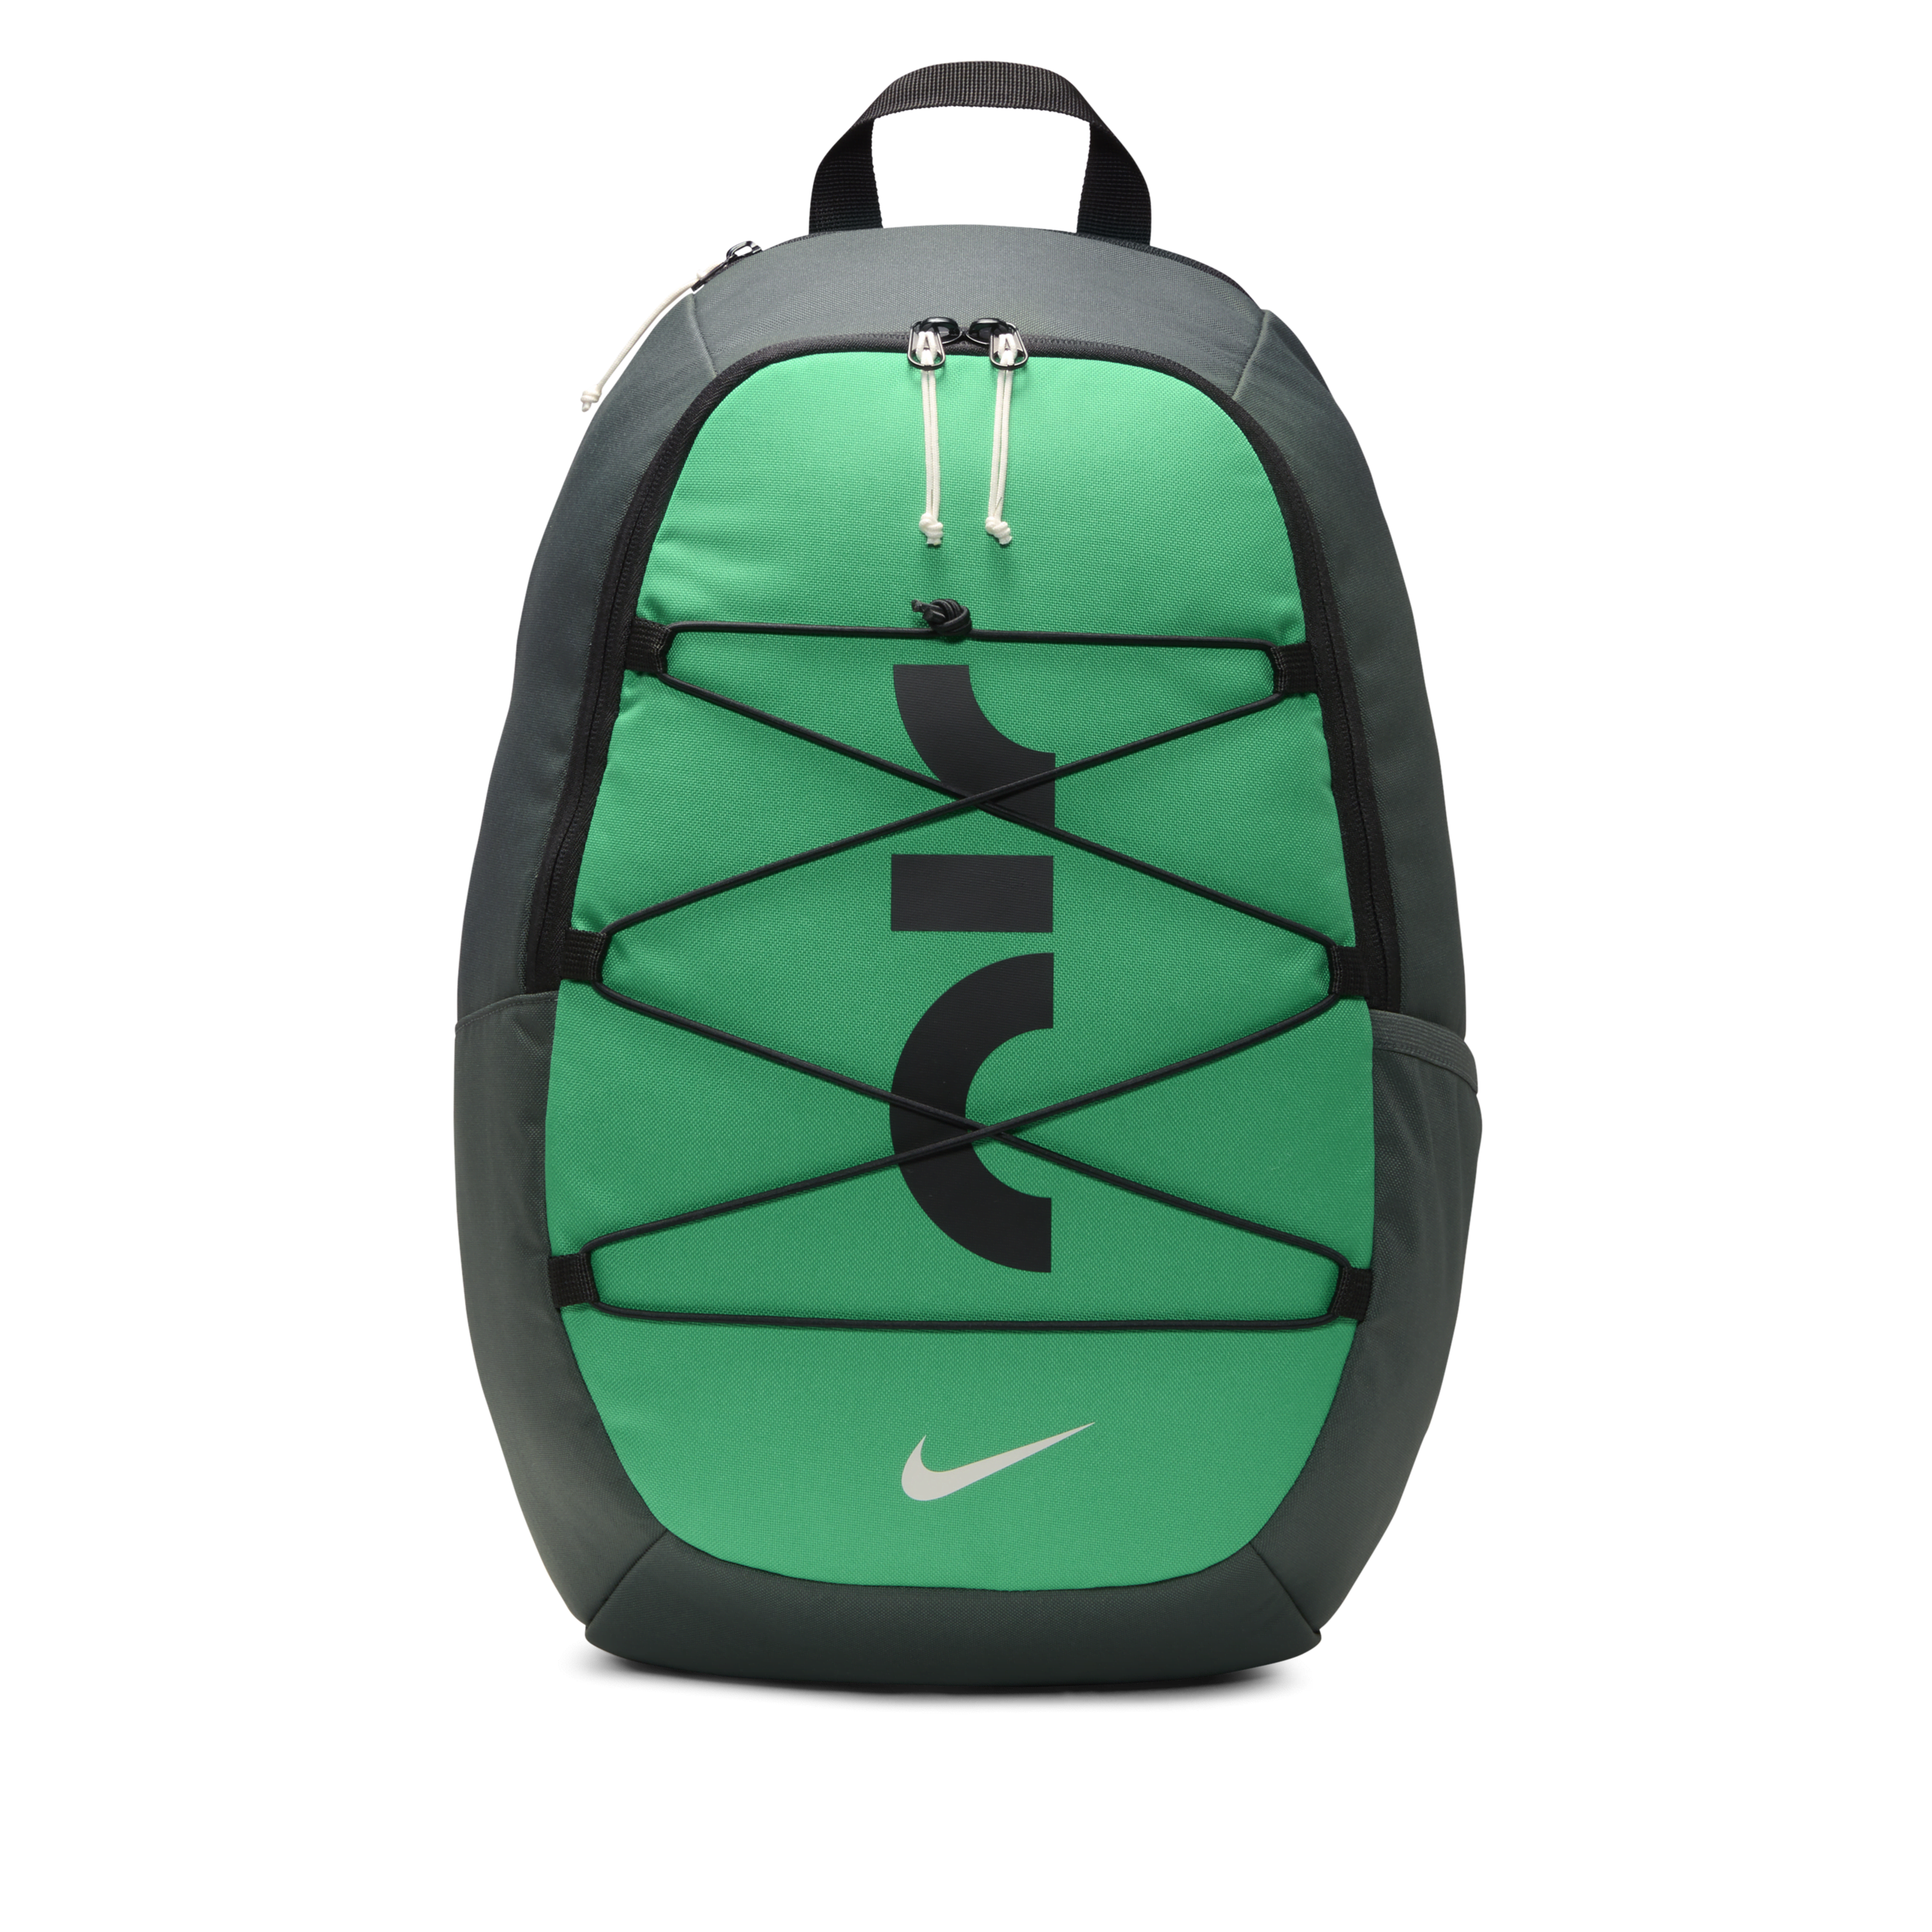 Nike Air Rugzak (21 liter) Groen